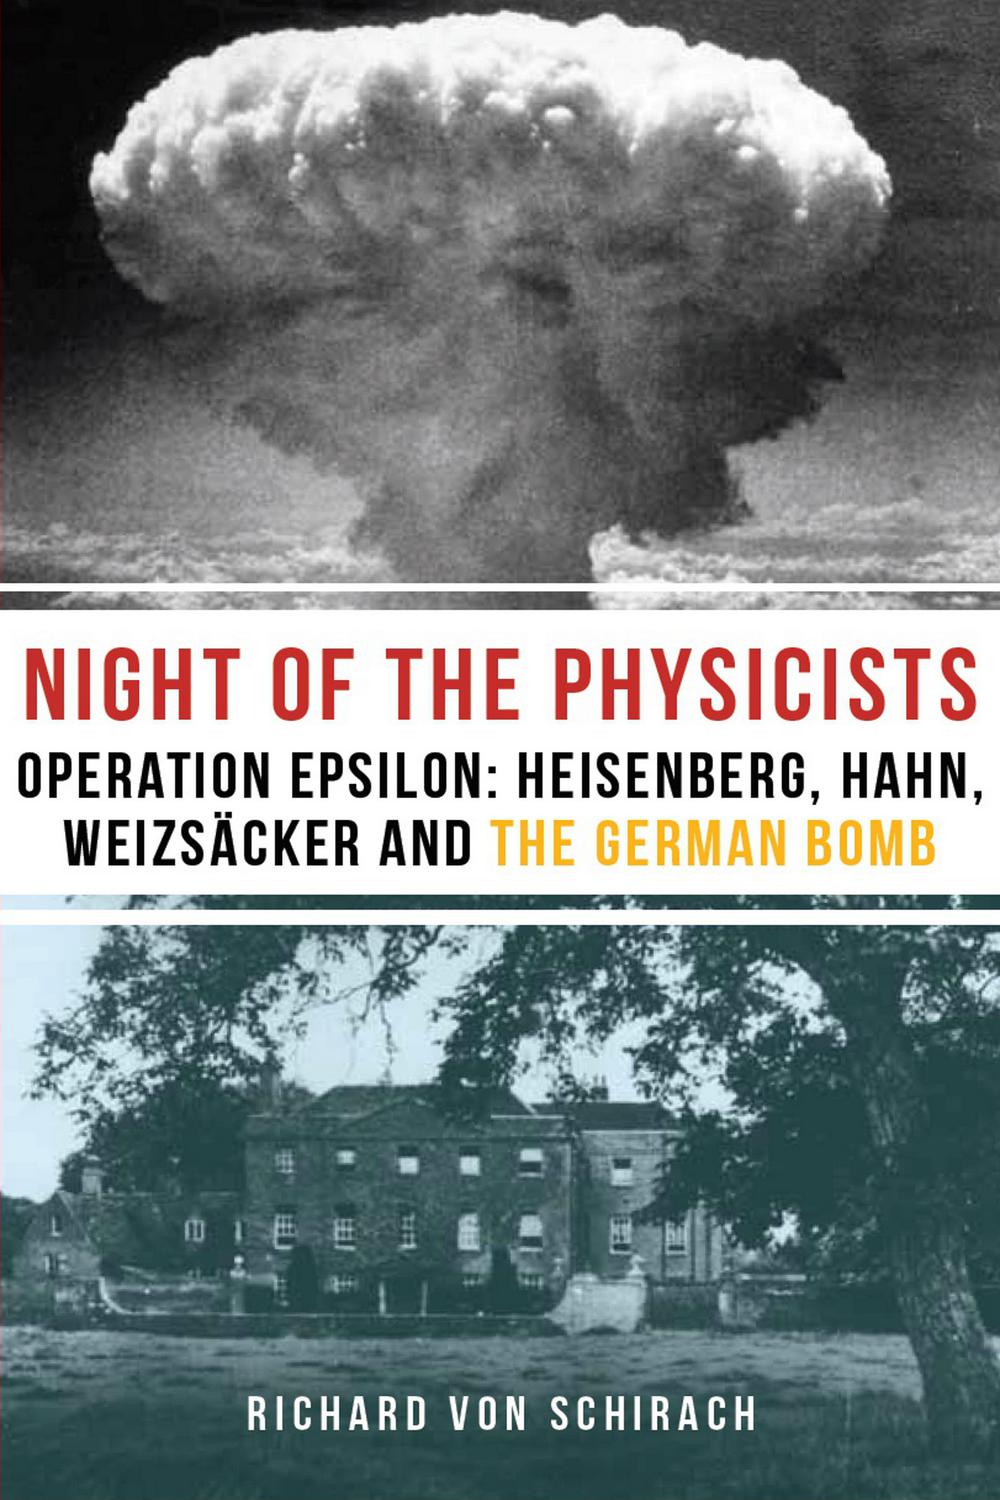 The Night of the Physicists: Operation Epsilon - Richard von Schirach